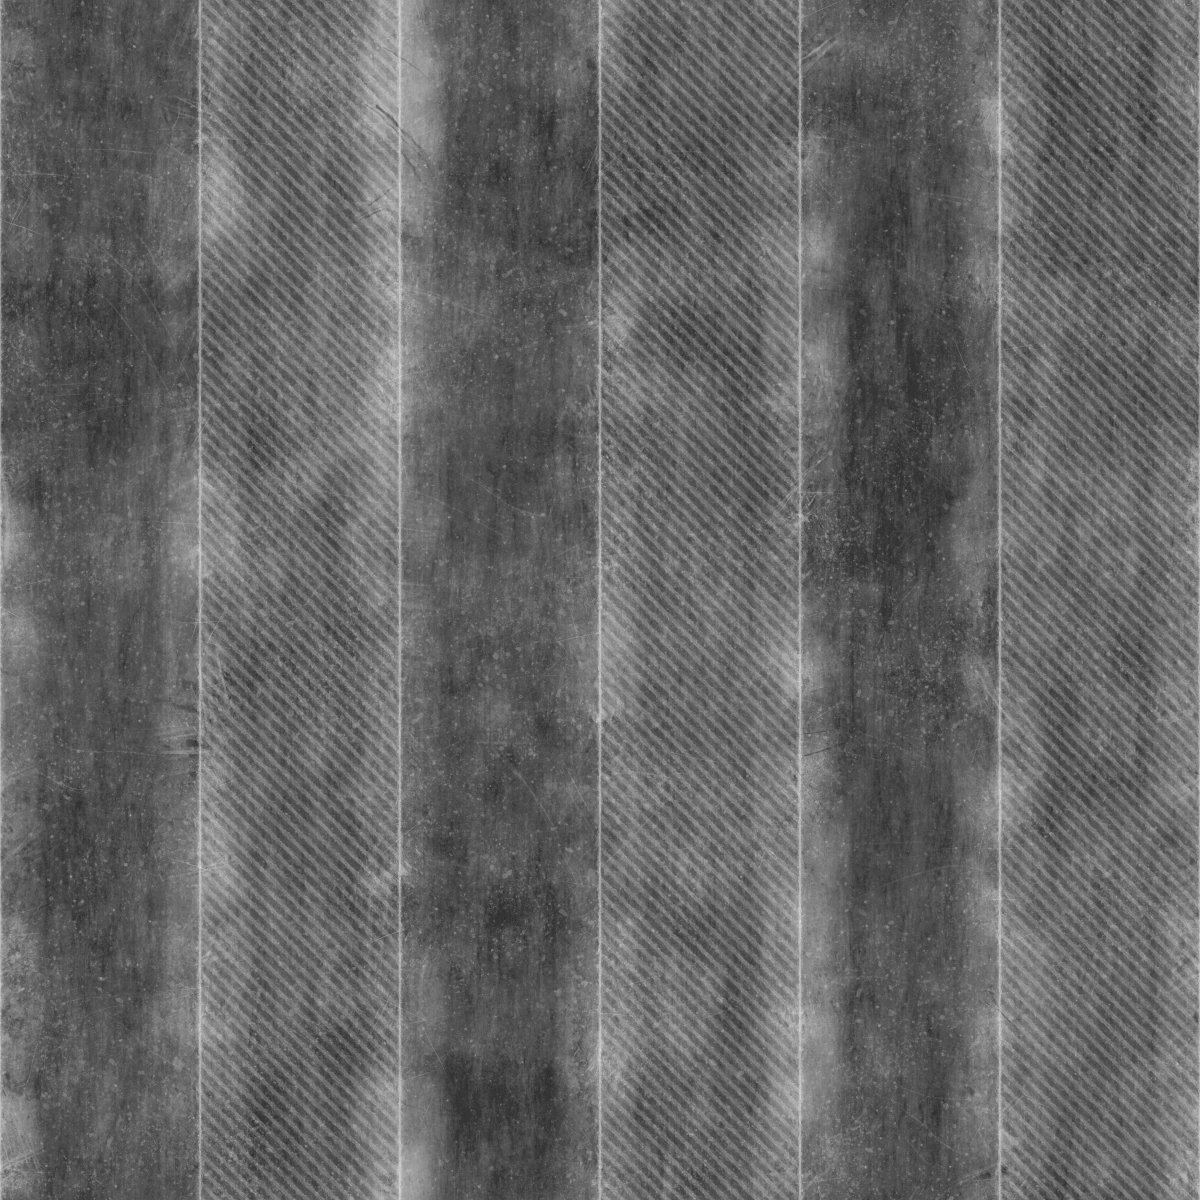 Striped Concrete Slabs PBR Texture